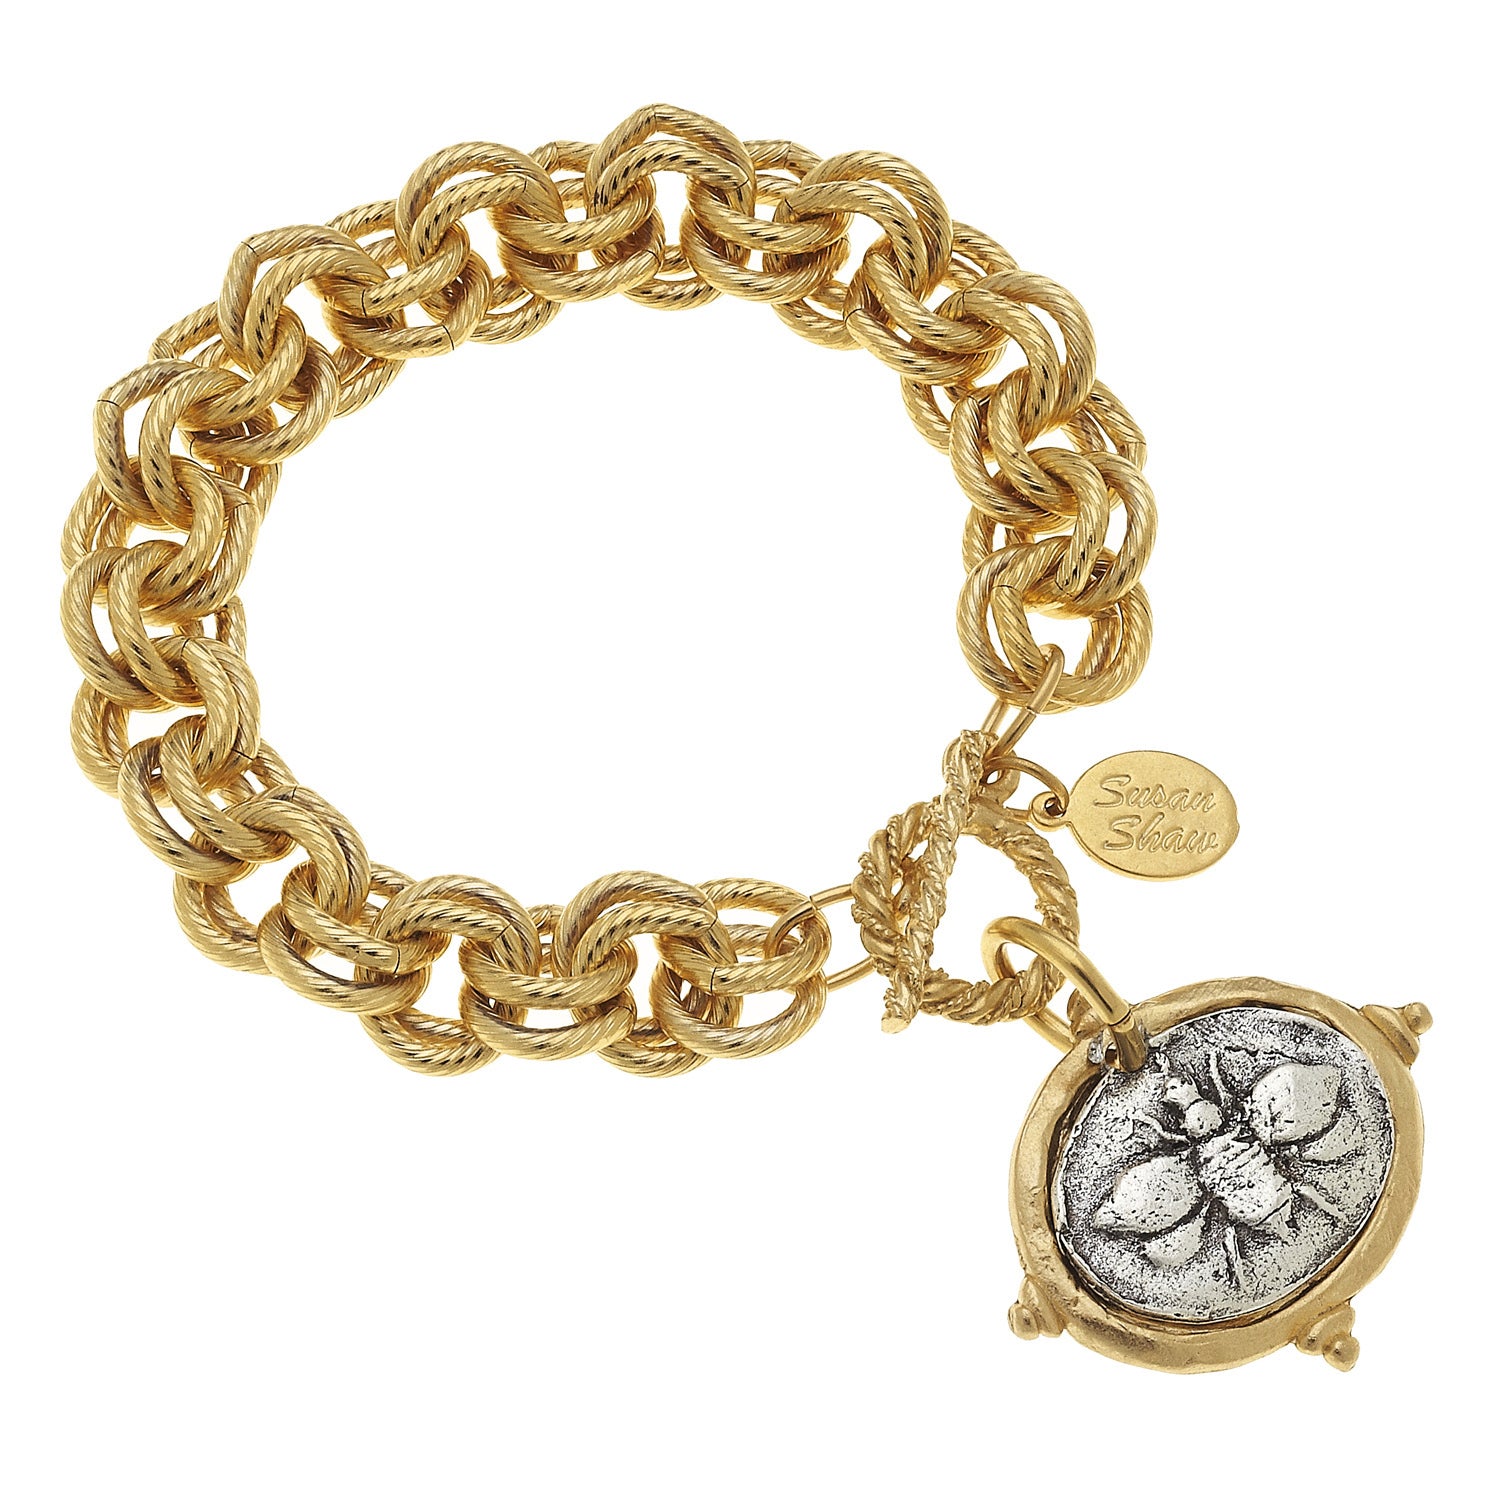 Susan Shaw Jewelry Handcast Bee Bracelet in Gold